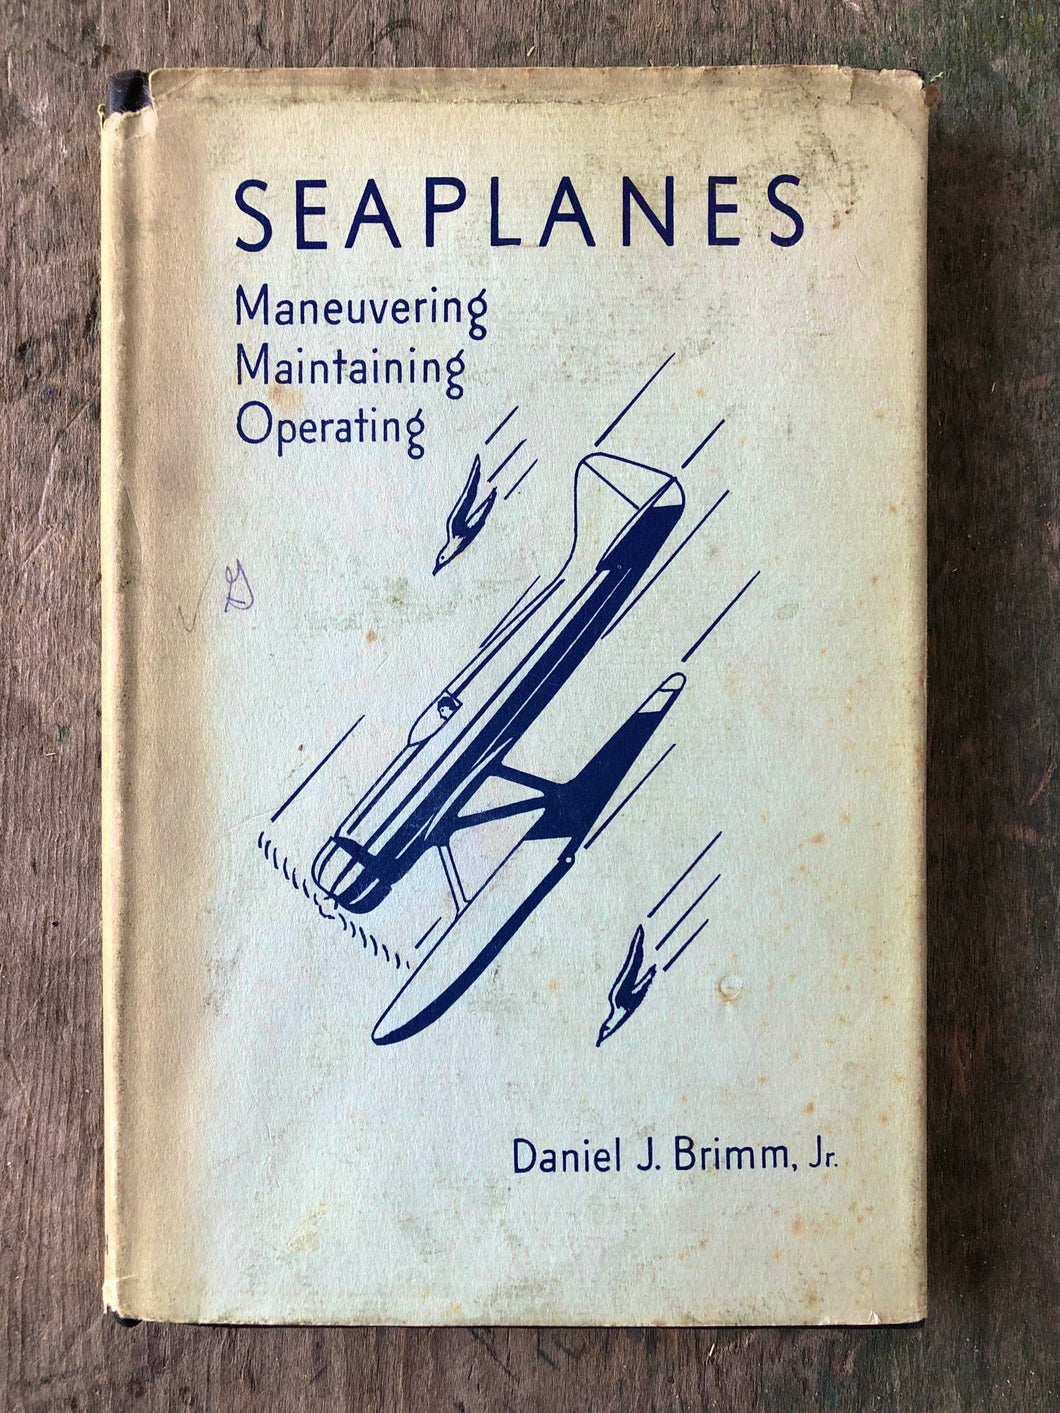 Seaplanes: Maneuvering, Maintaining, Operating by Daniel J. Brimm, Jr.